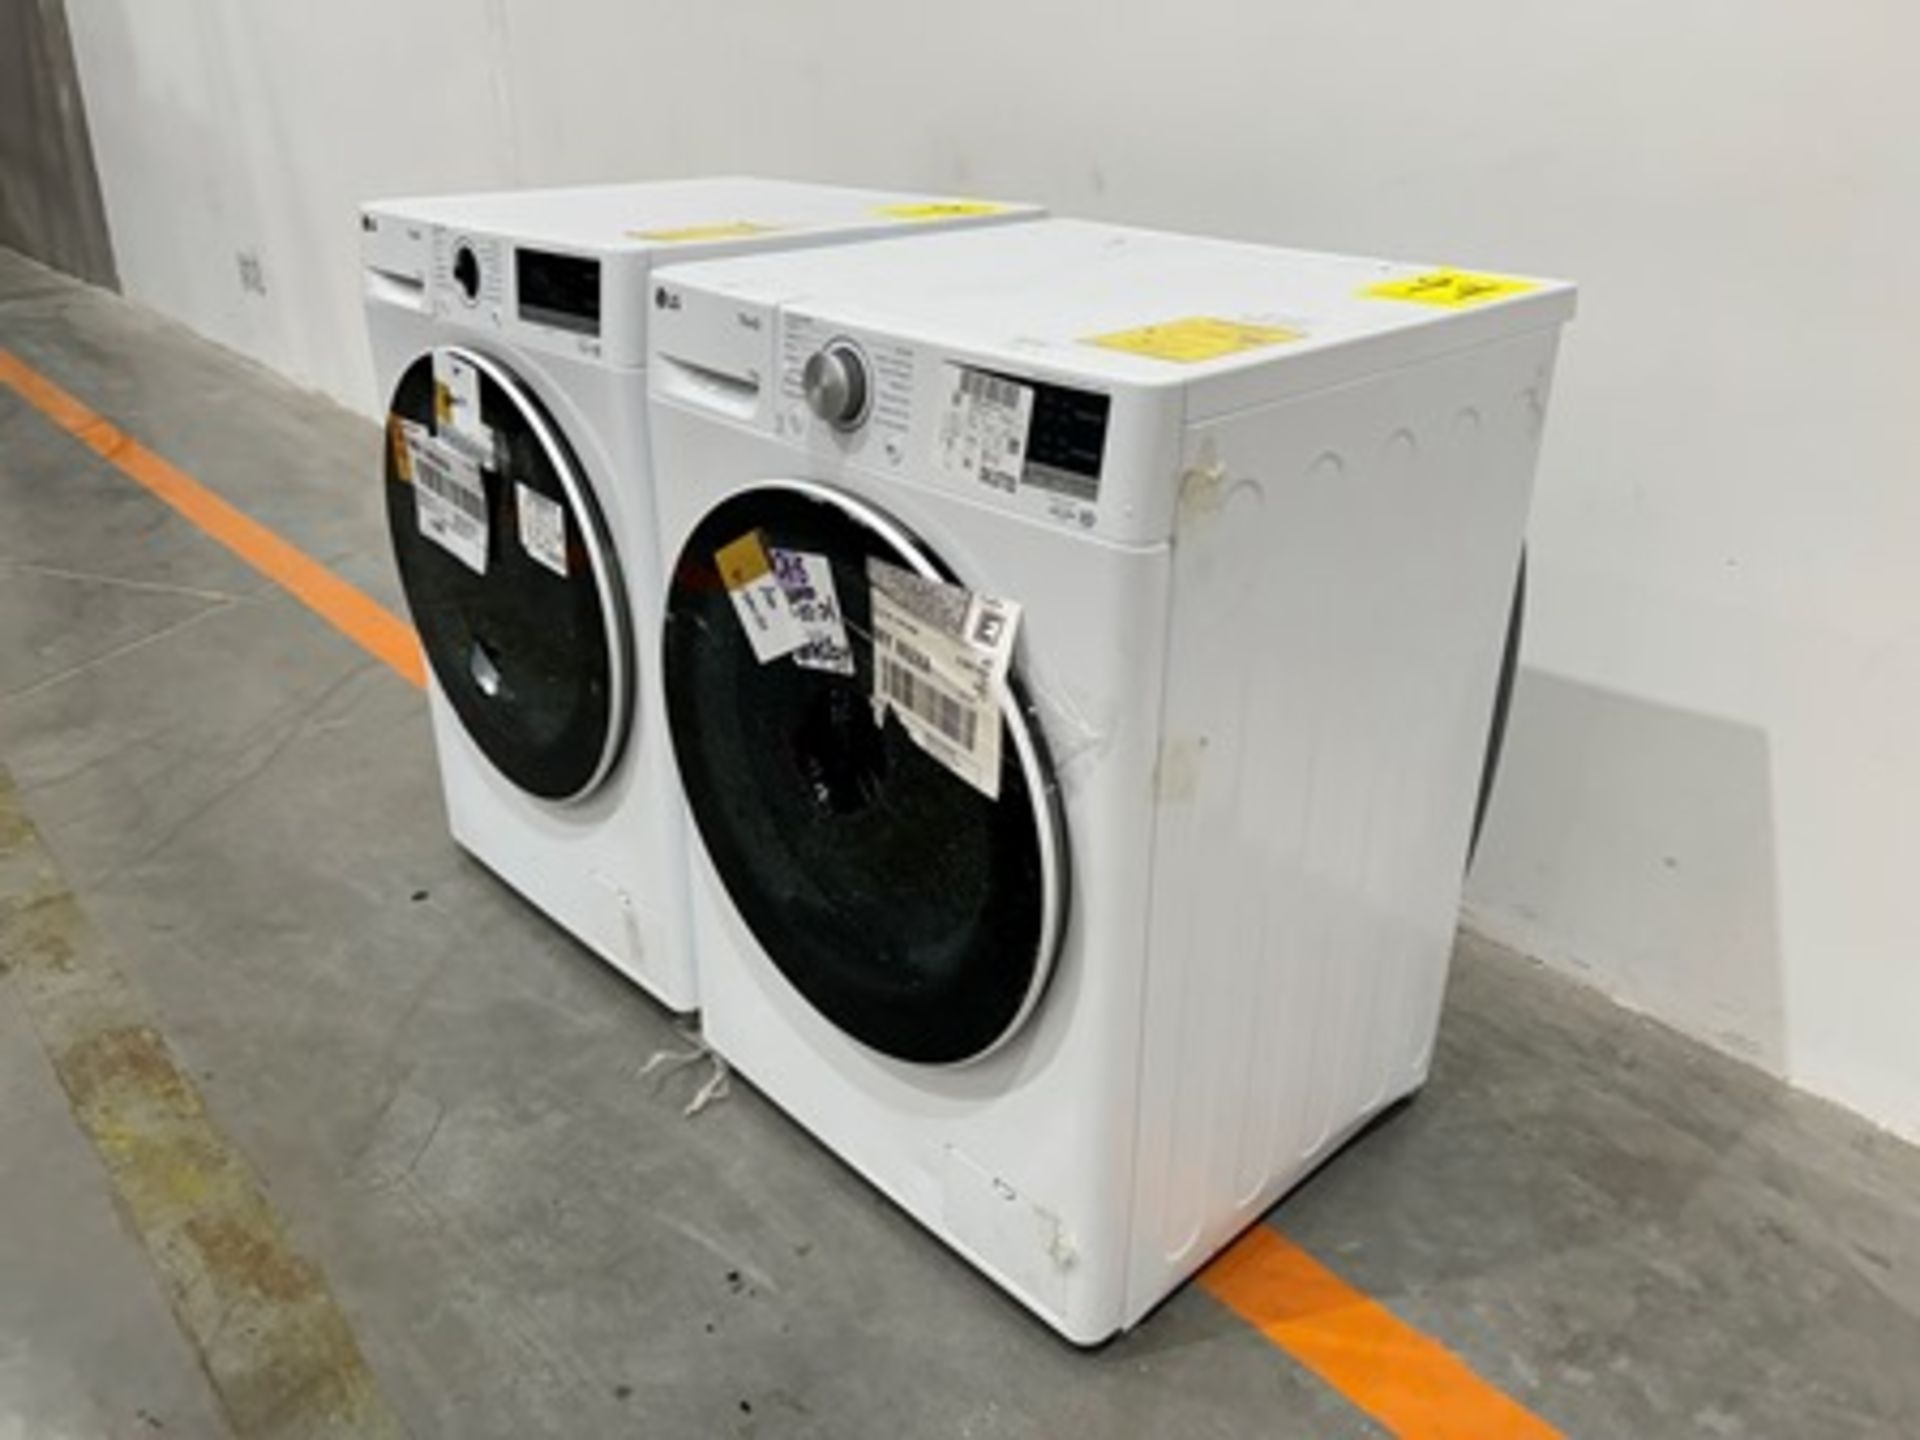 Lote de 2 lavadoras contiene: 1 Lavadora de 12 KG Marca LG, Modelo WM12WVC4S6, Serie 53846, Color B - Image 2 of 8